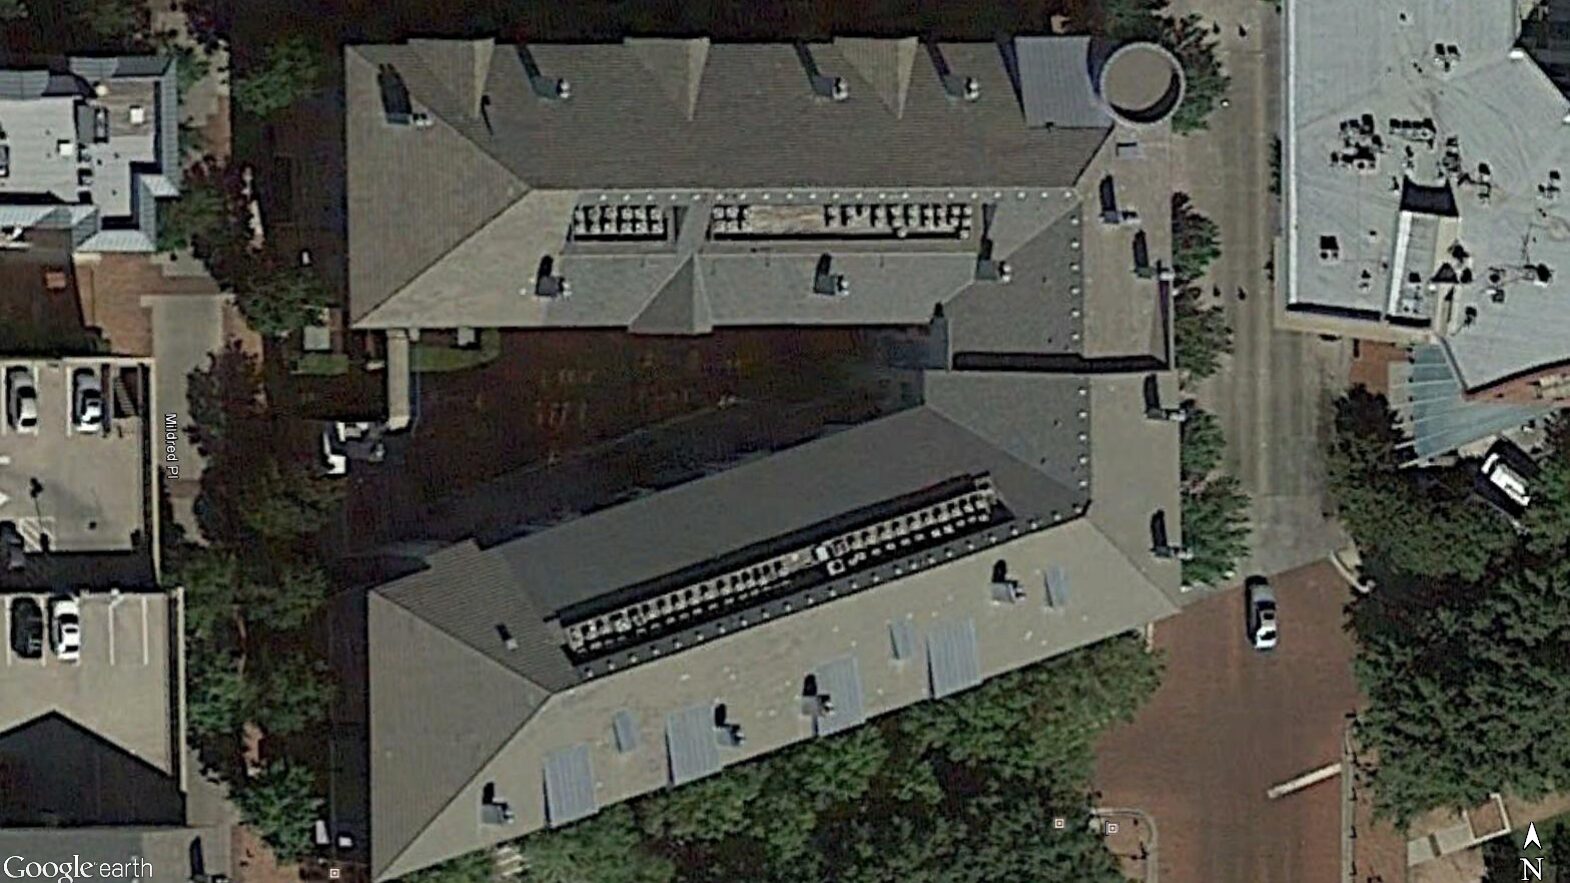 Google Earth satellite image of a flat-profile concrete tile roof.